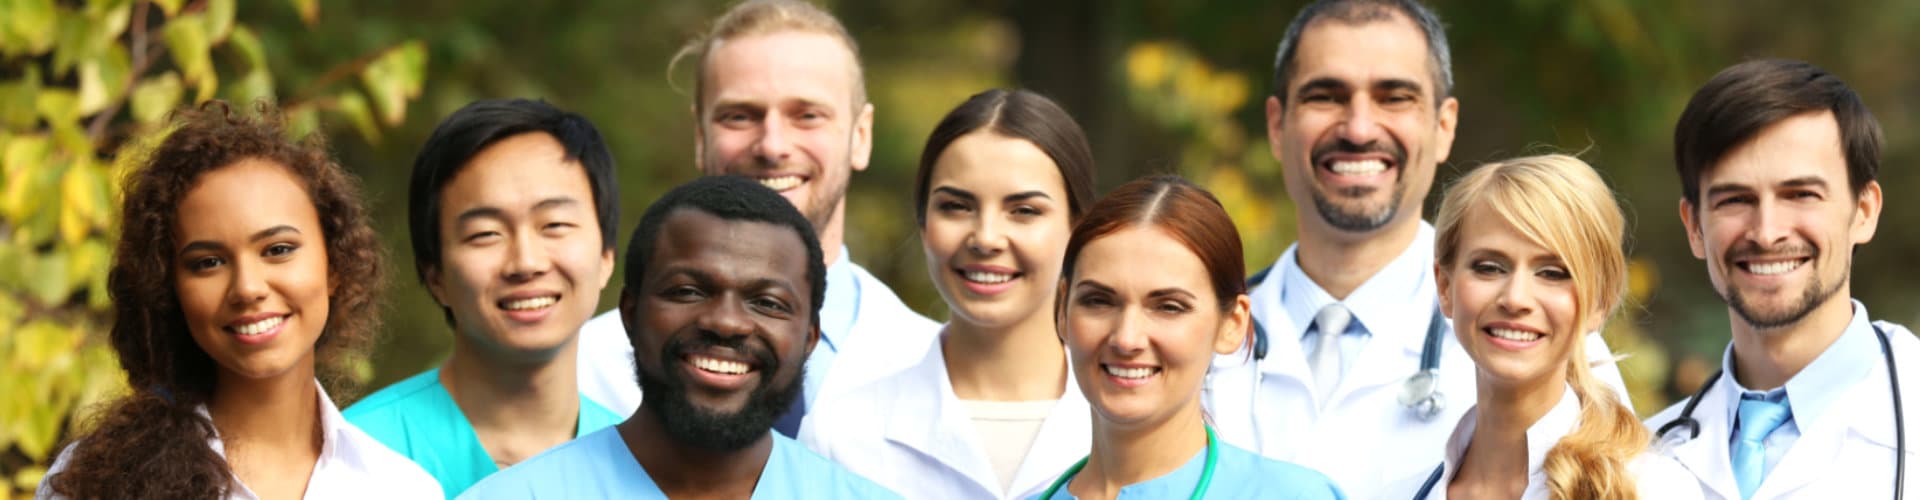 multiracial doctors smiling at camera